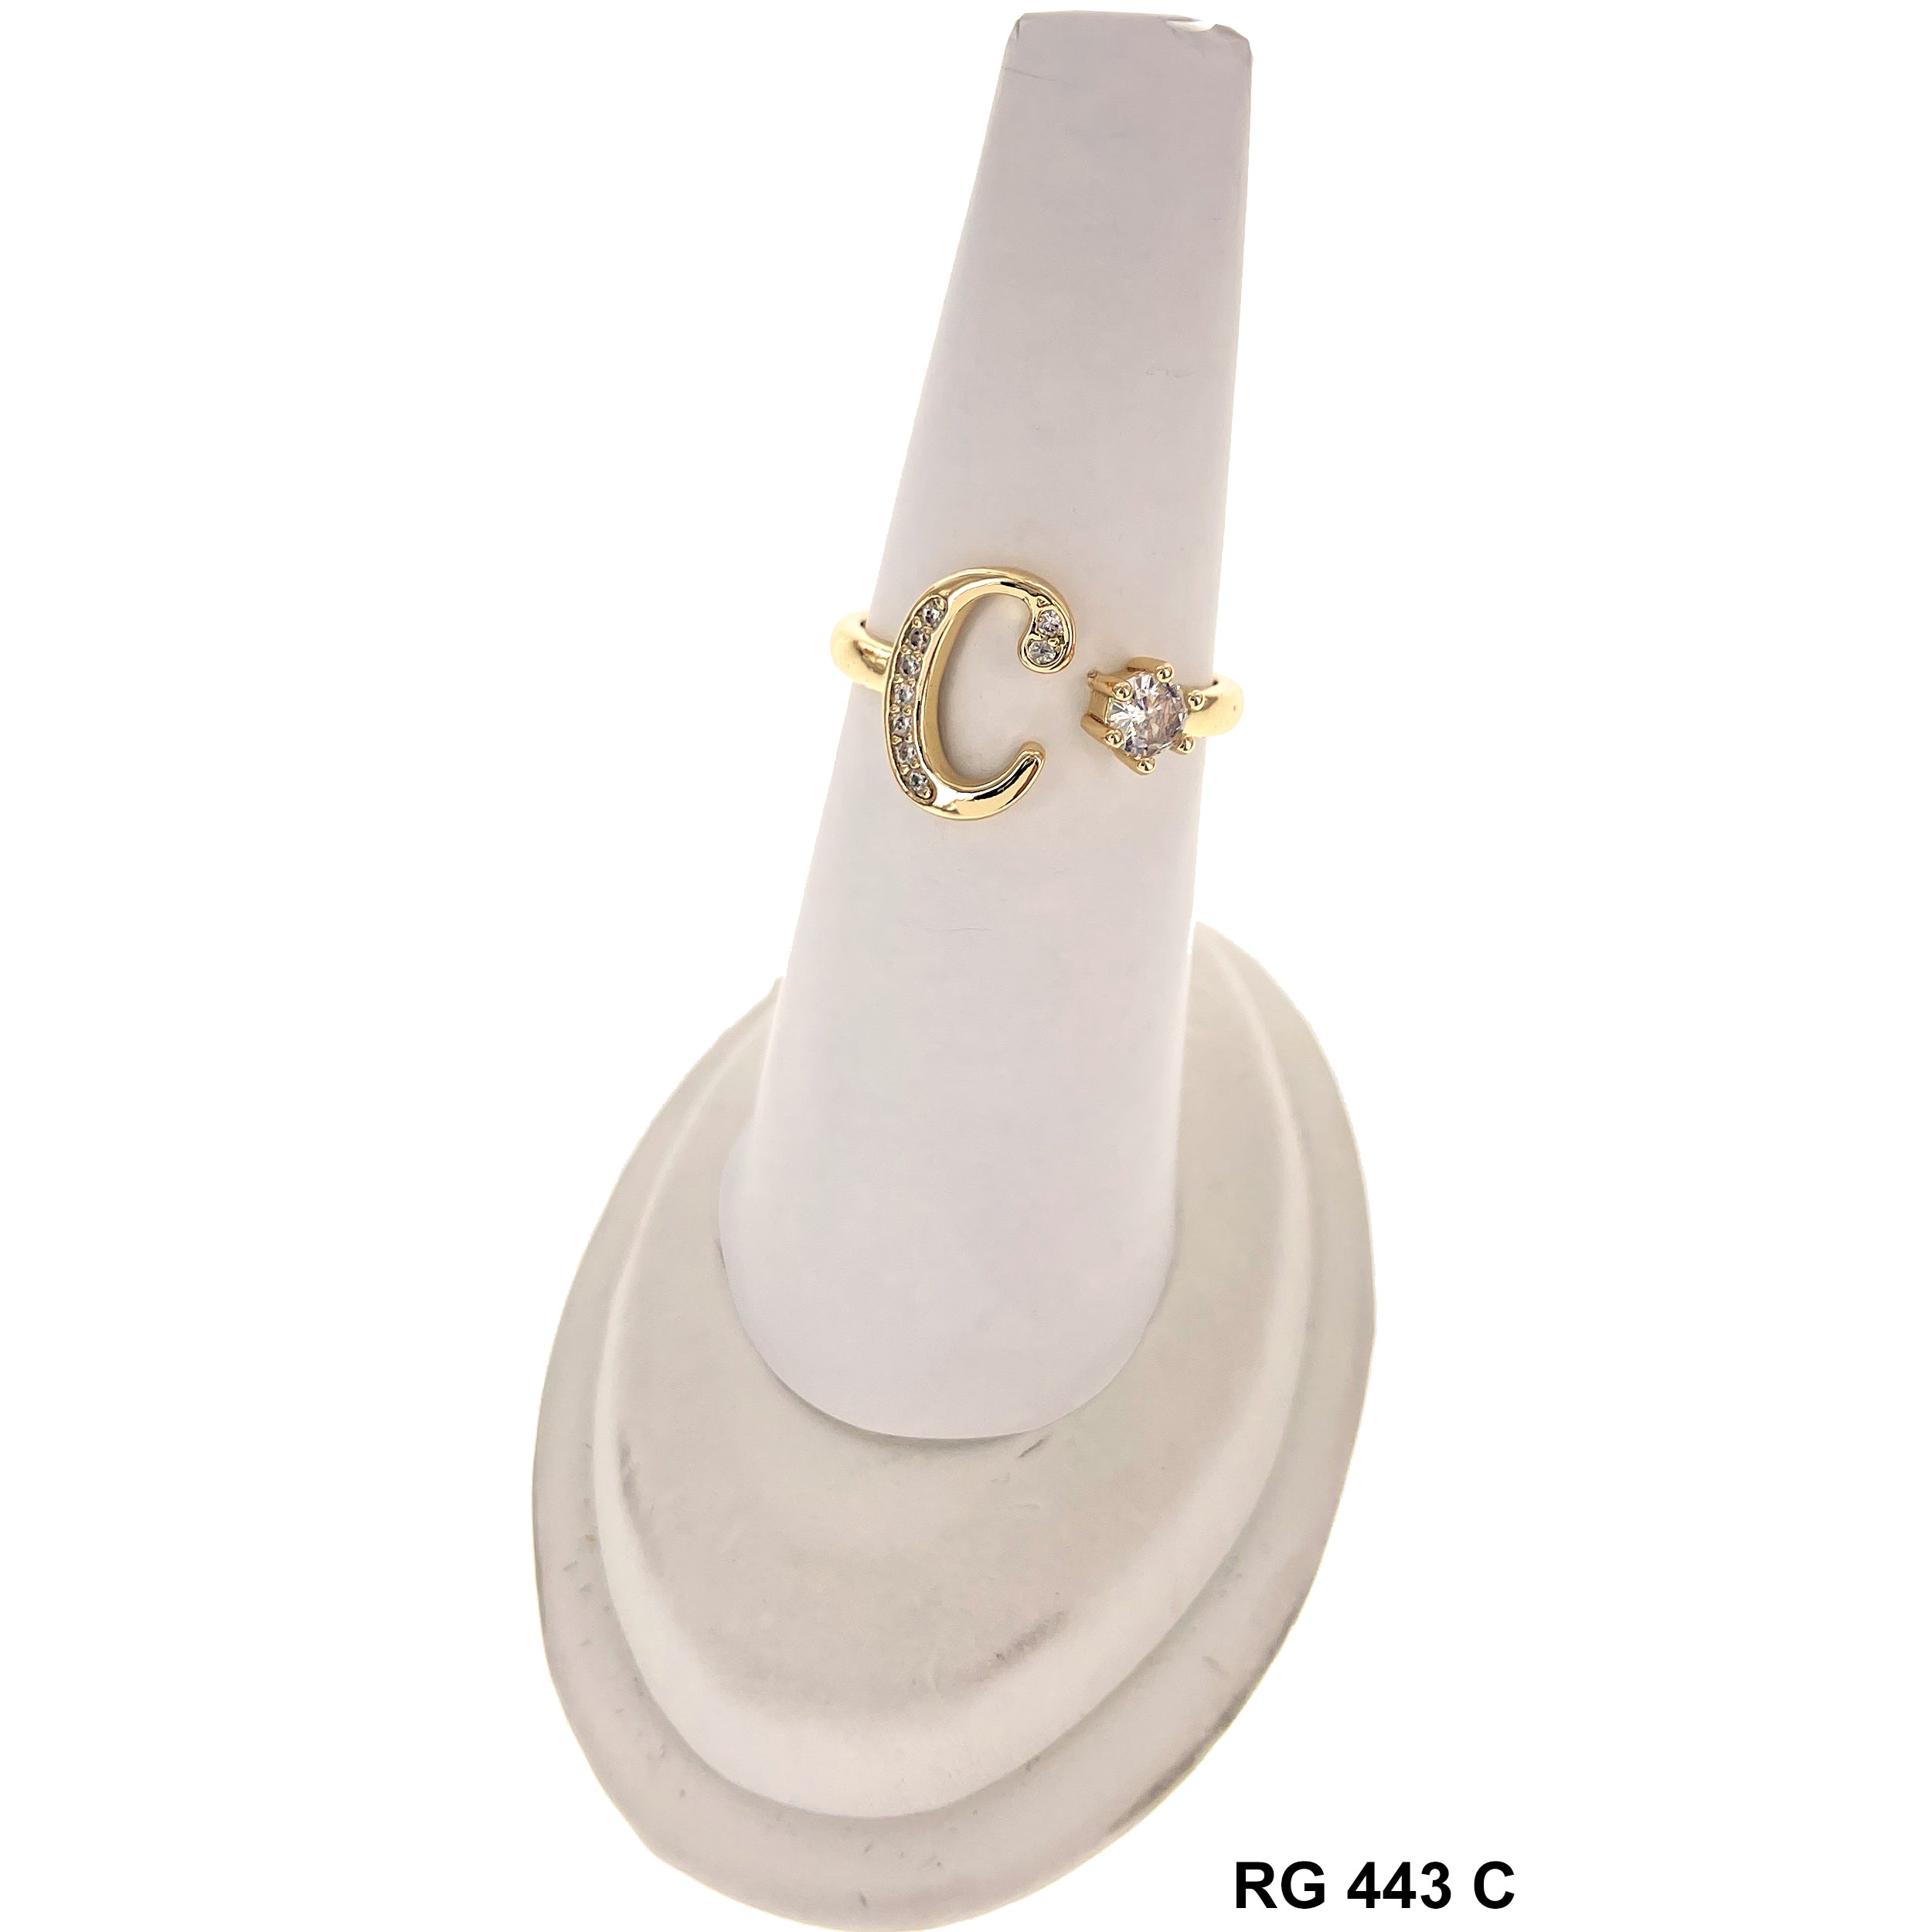 Initial Adjustable Ring RG 443 C